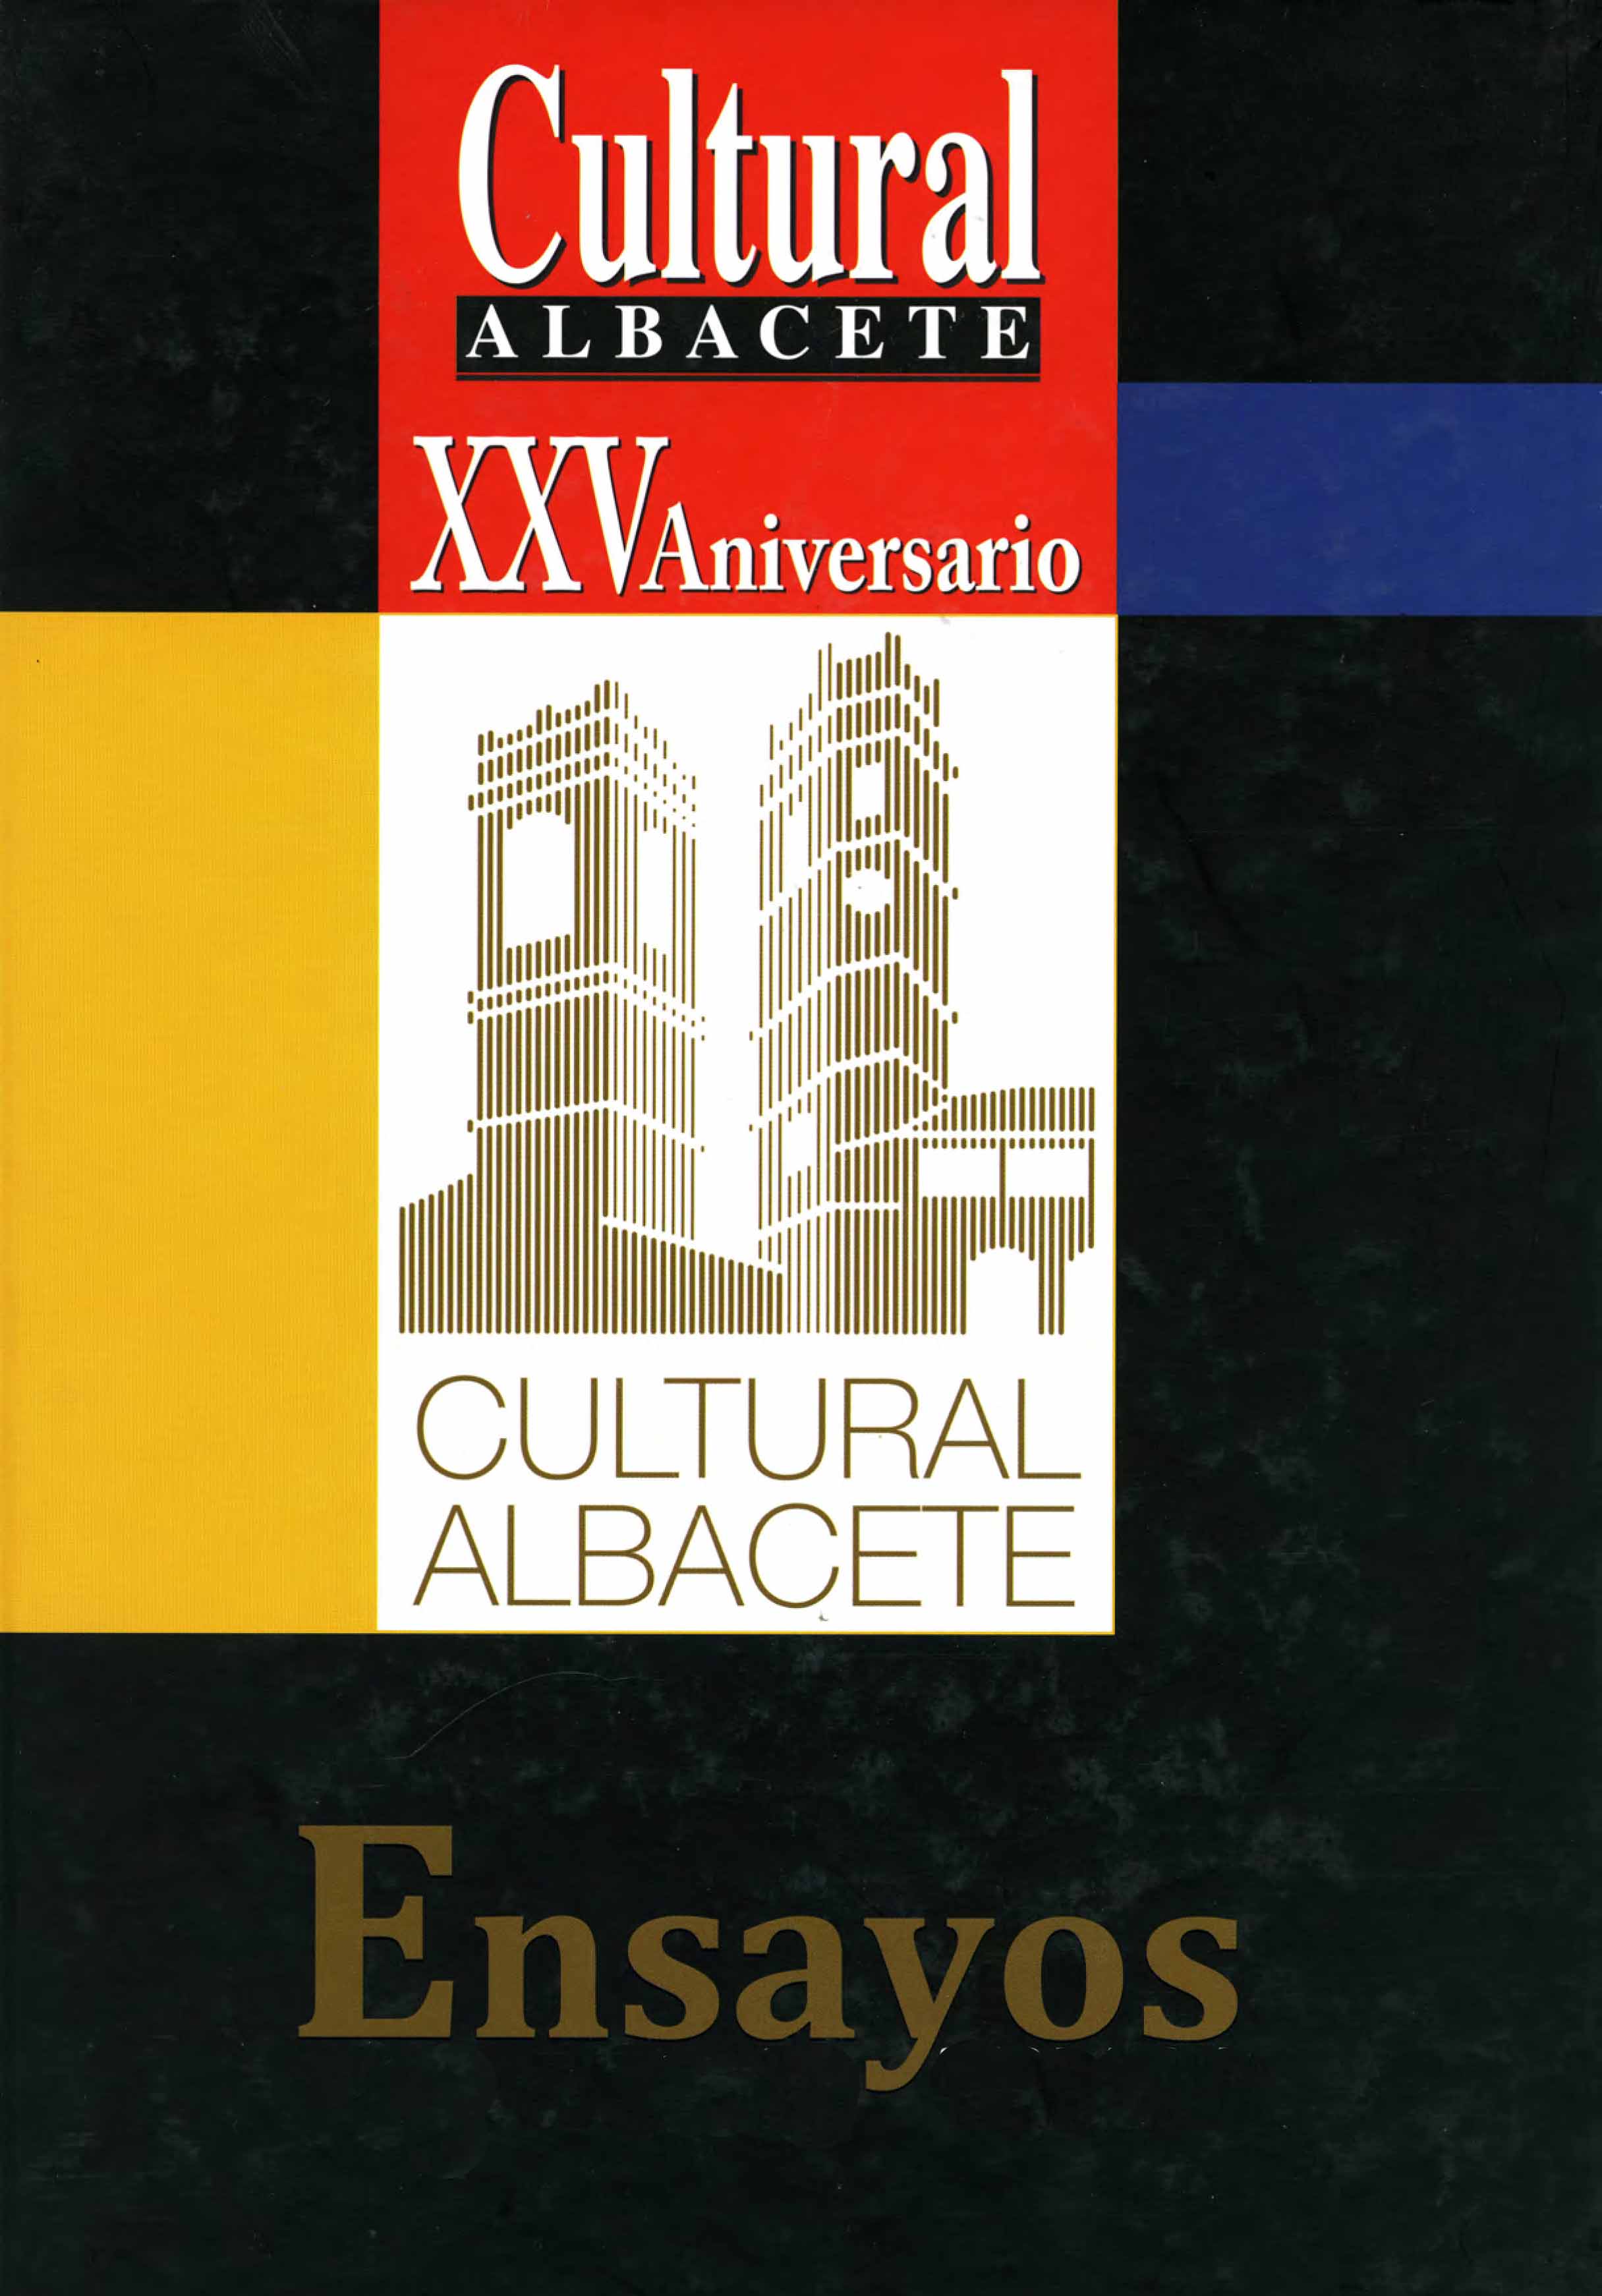 Imagen de portada del libro Cultural Albacete